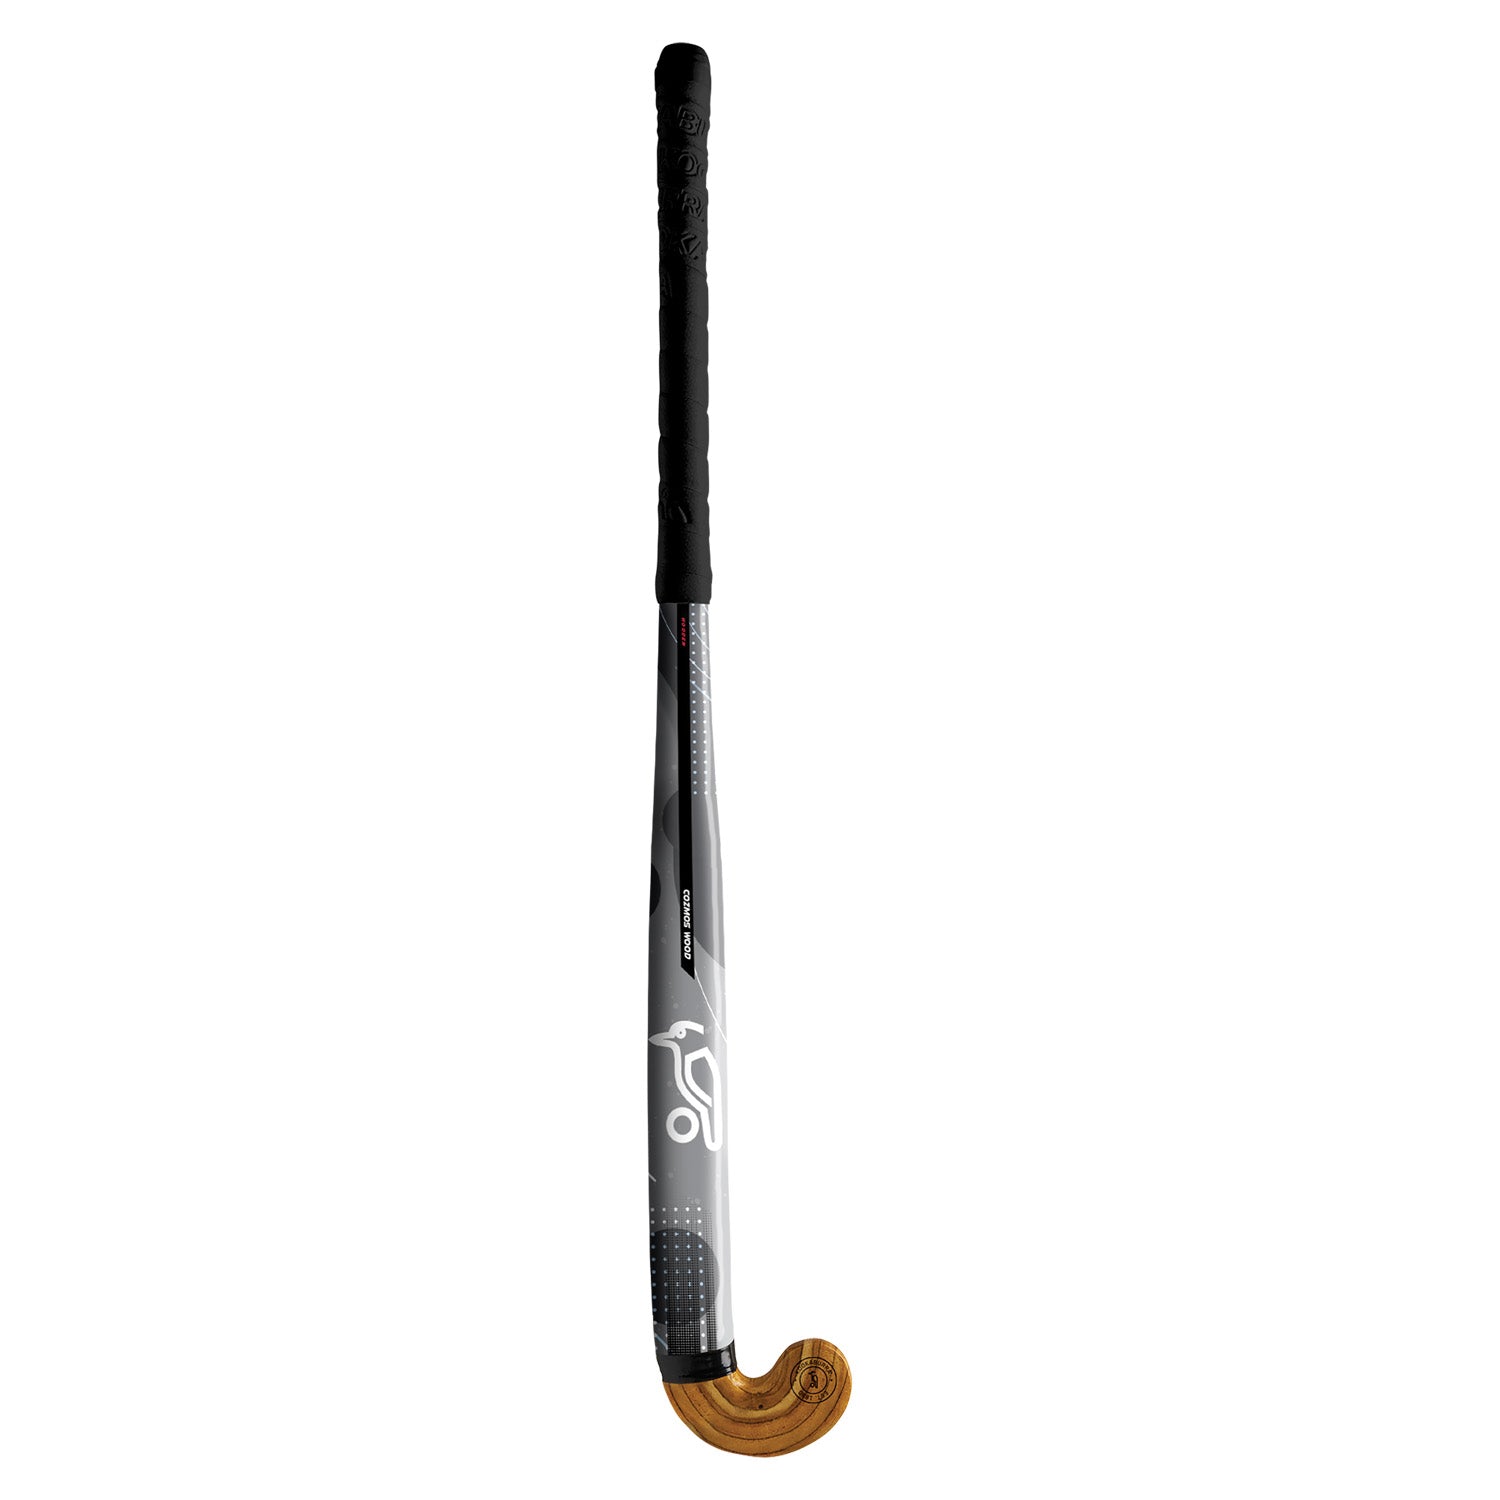 Kookaburra Cozmos Wooden 30 Hockey Stick